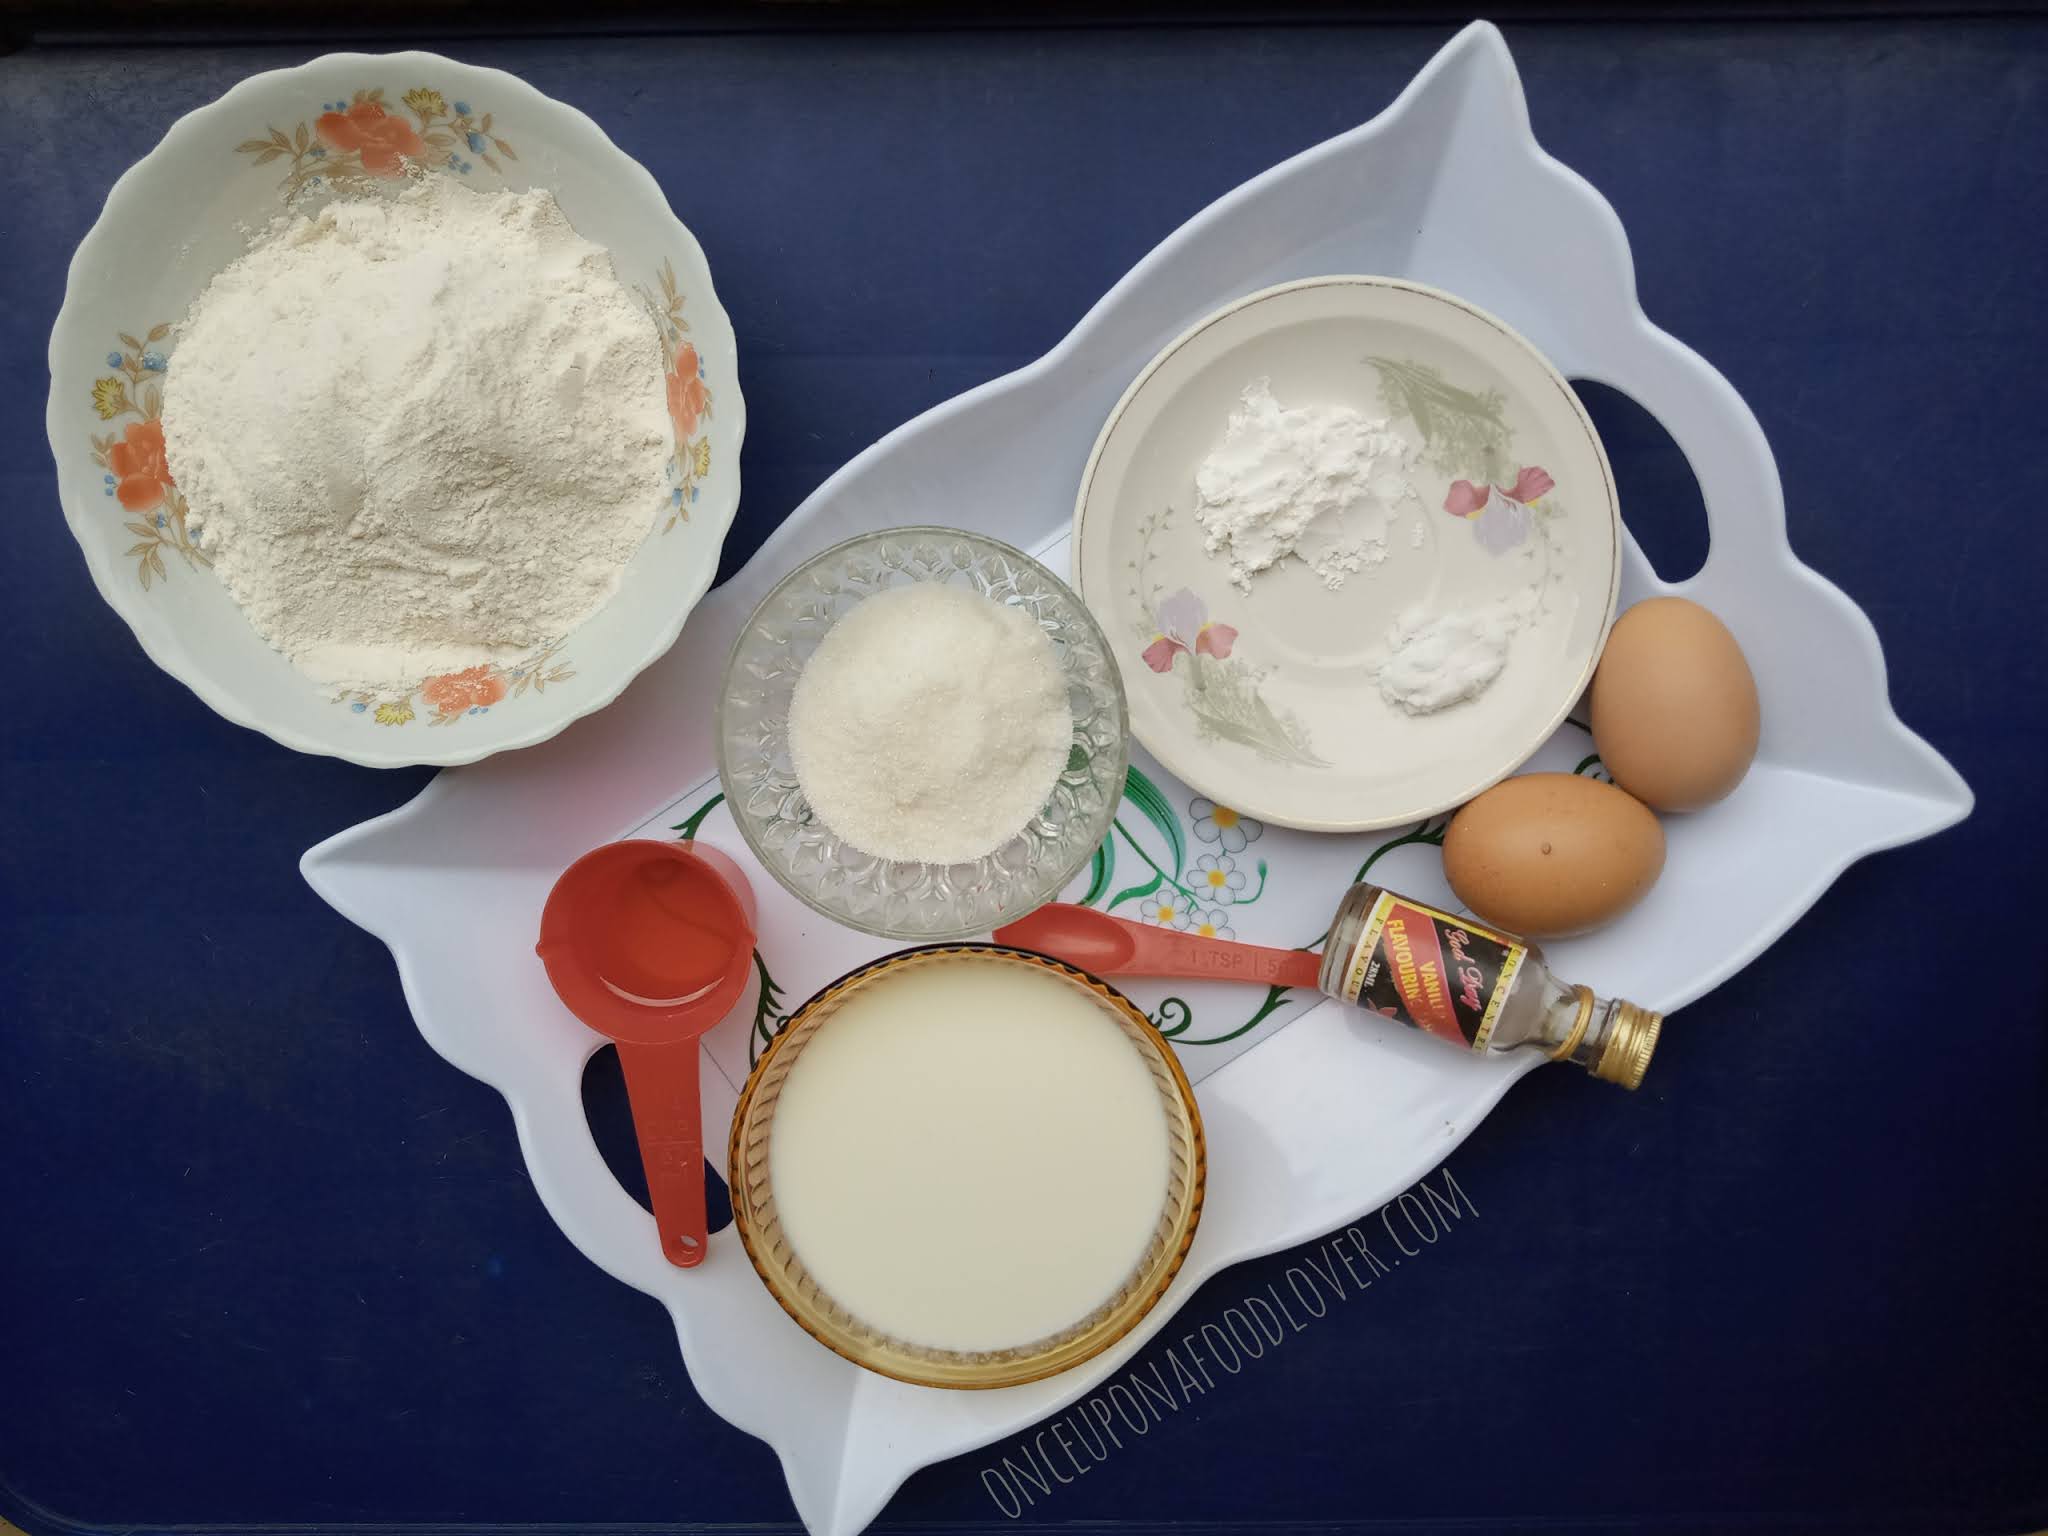 Ingredients for mini pancakes